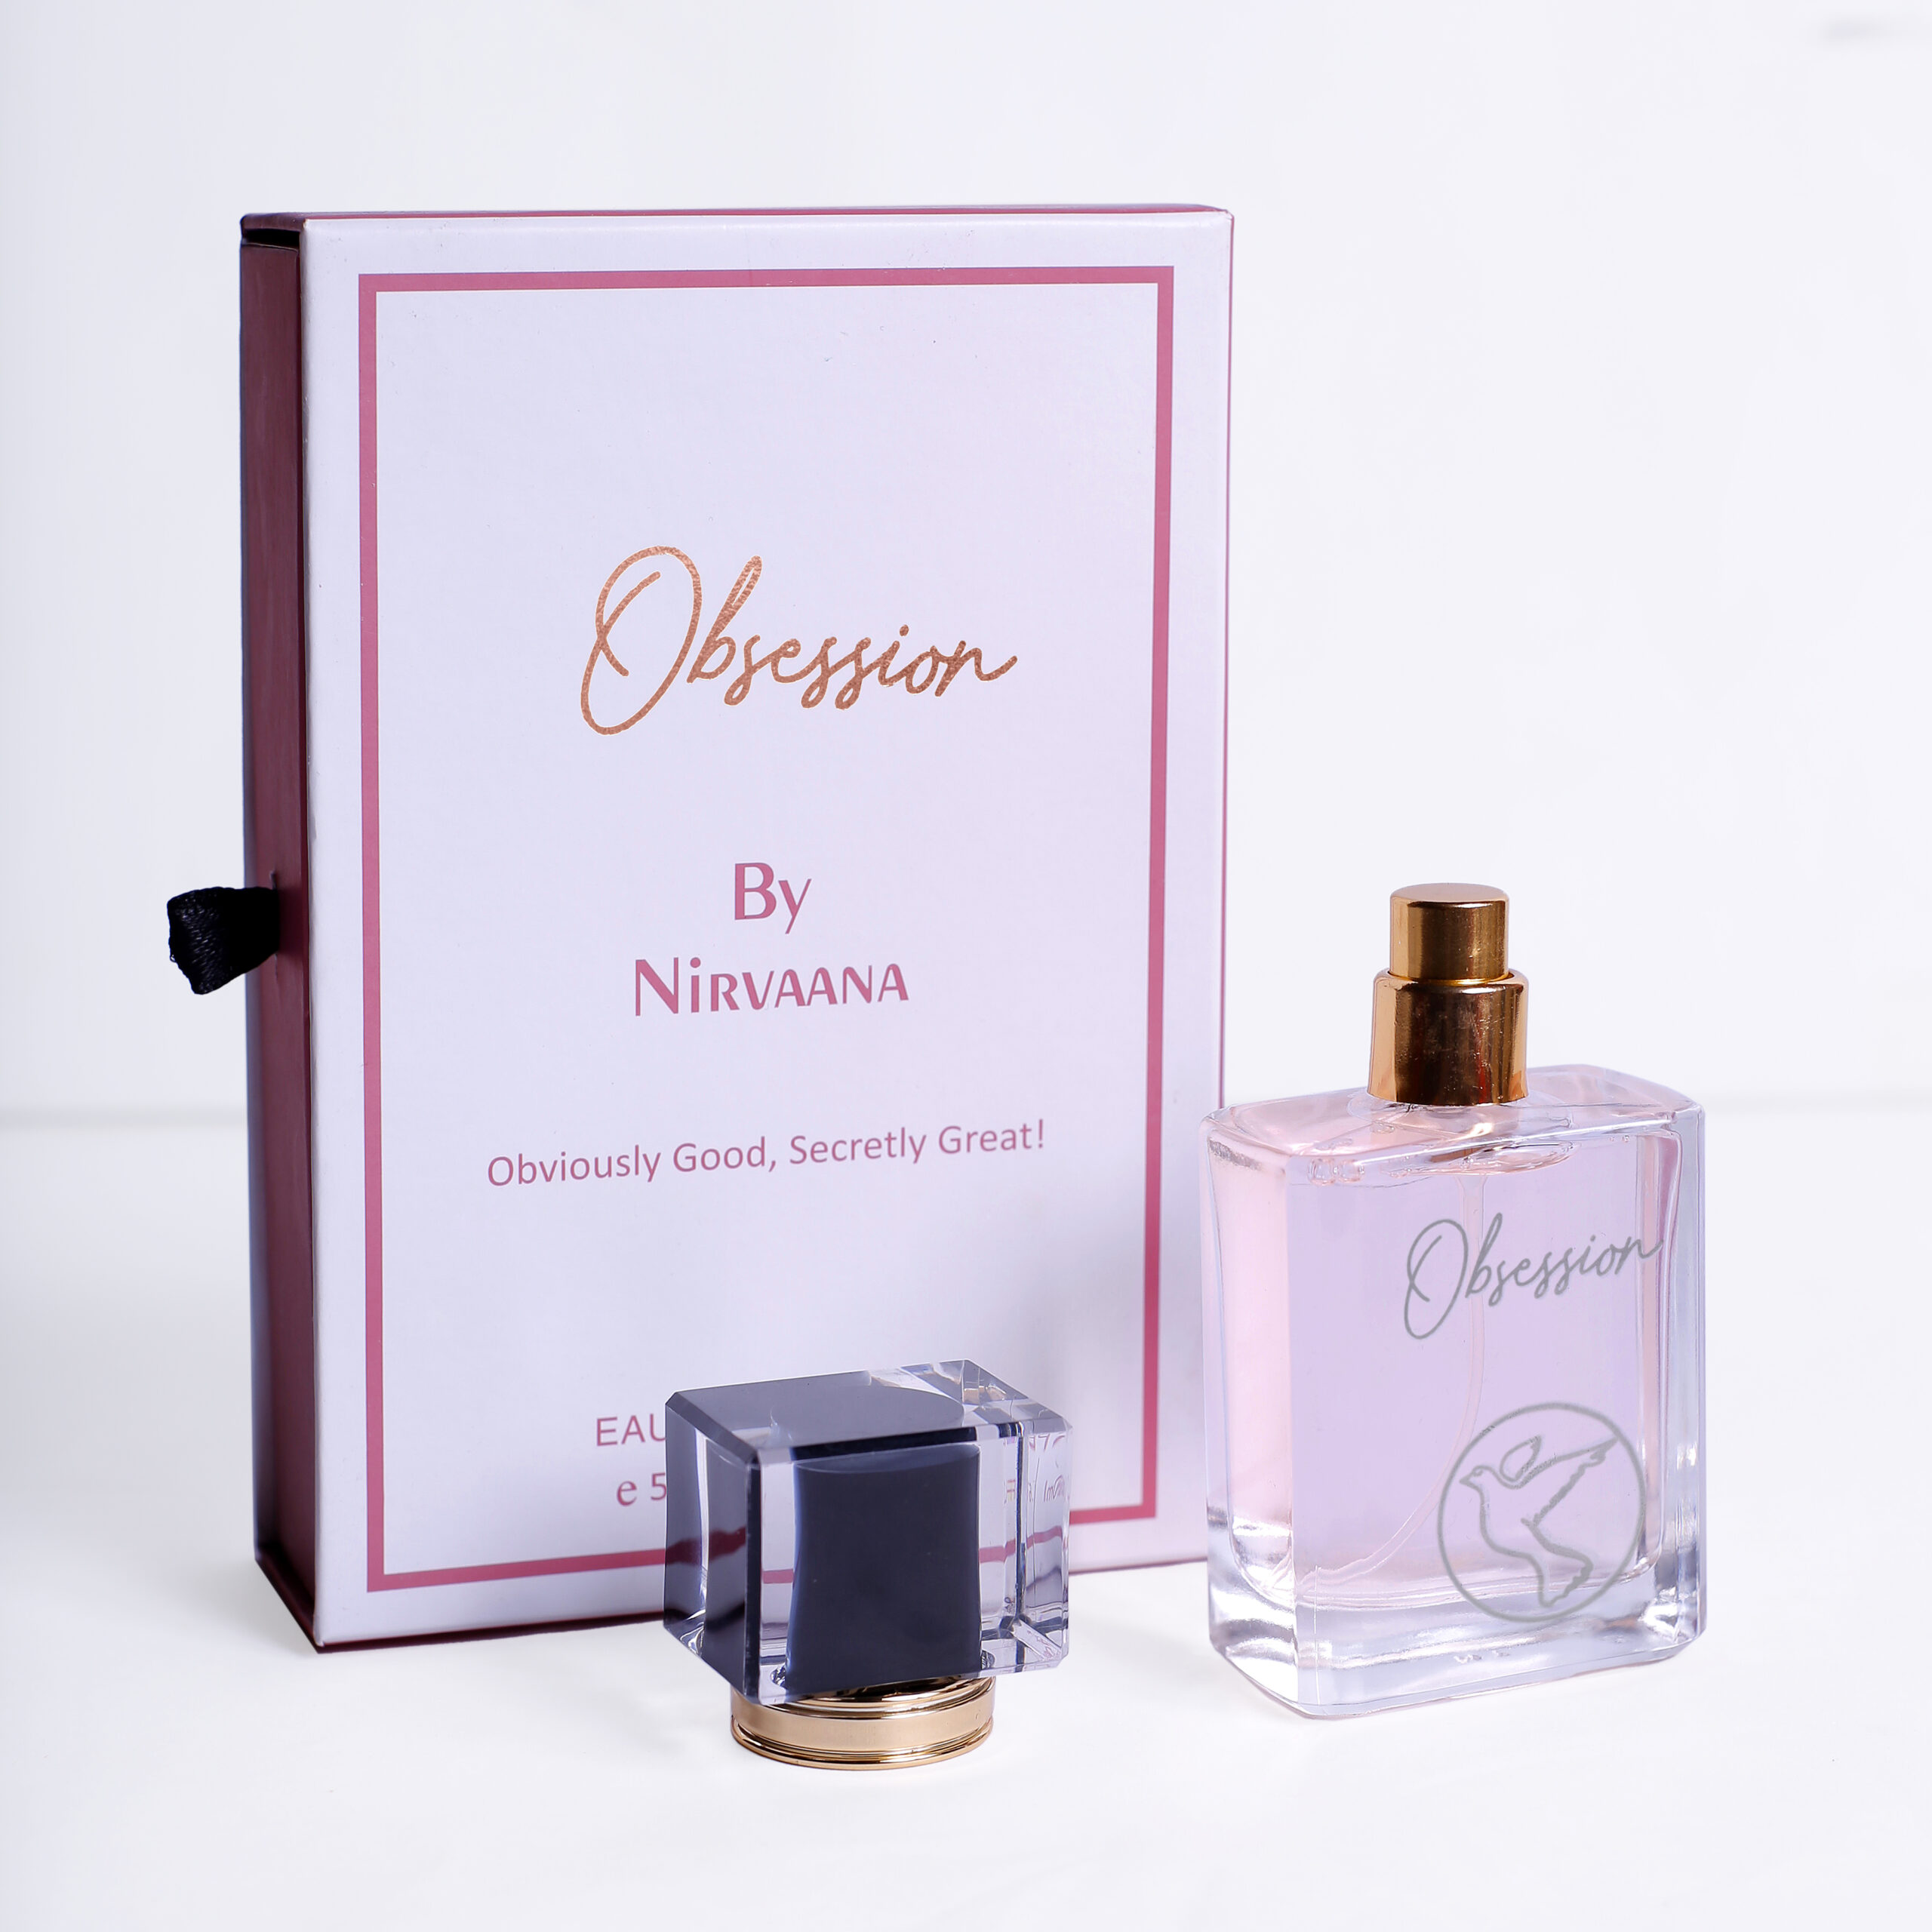 Obsession, Nirvana perfumes